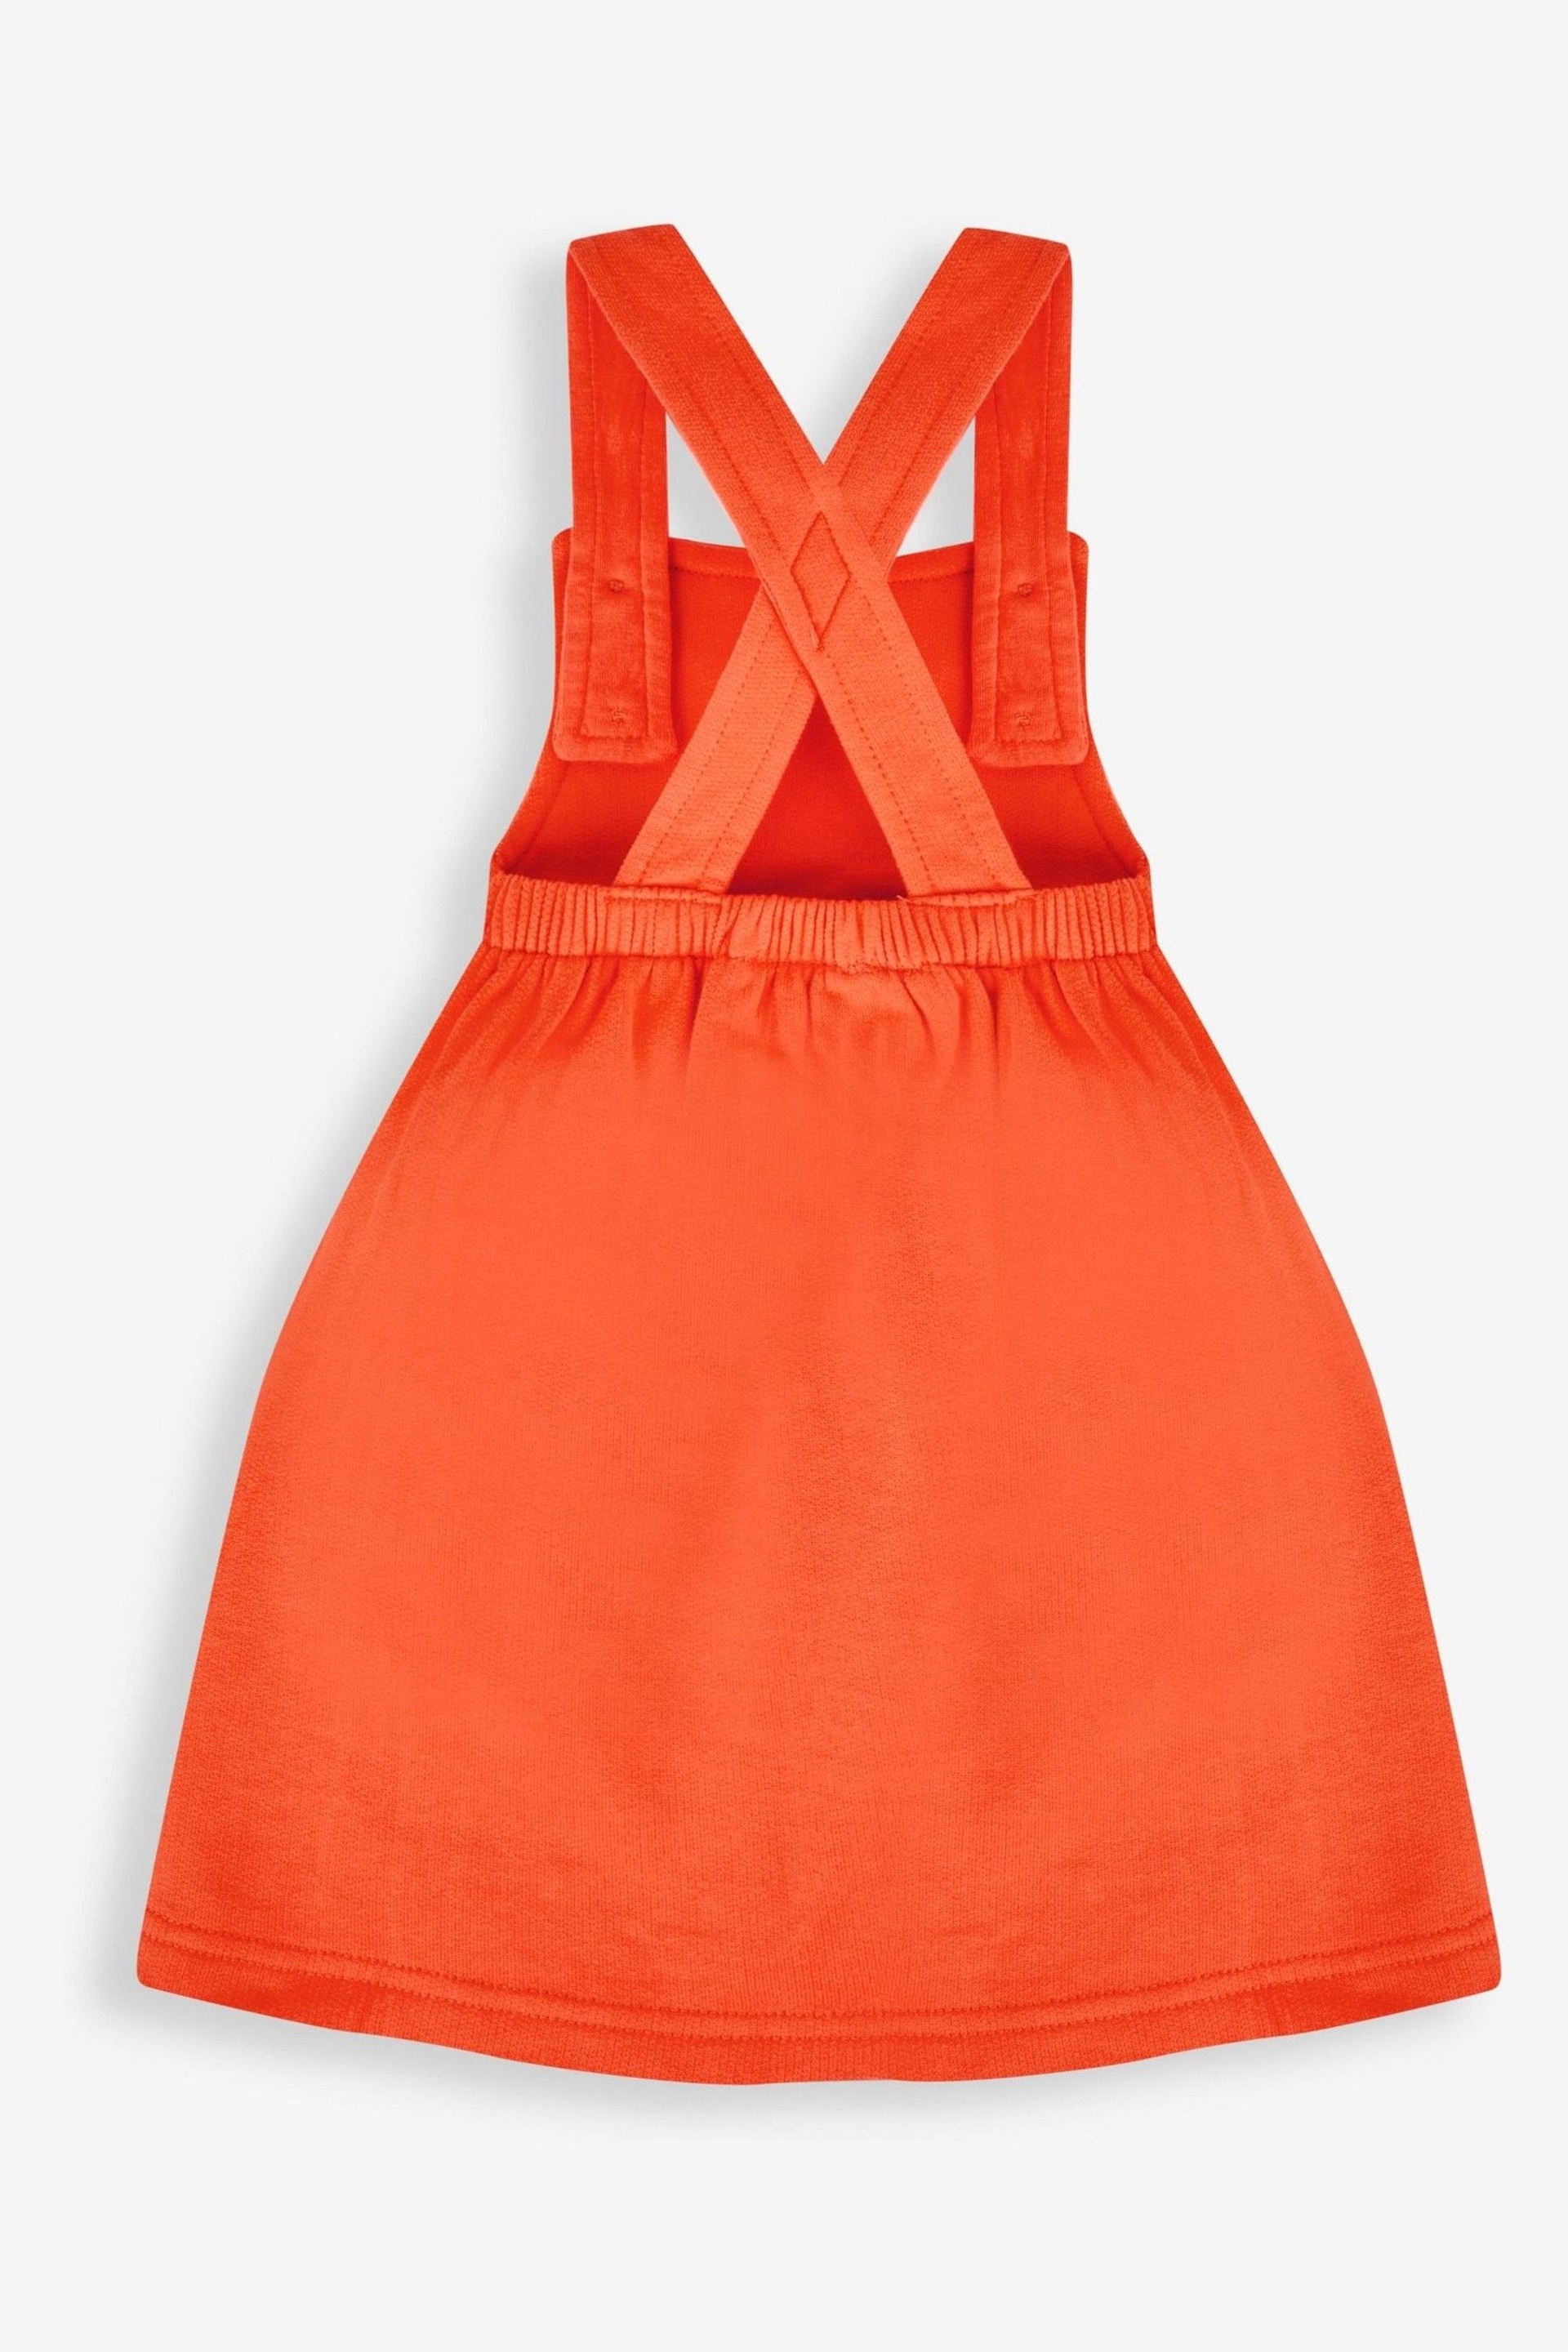 JoJo Maman Bébé Rust Orange Hedgehog Girls' 2-Piece Appliqué Pinafore Dress & Top Set - Image 3 of 6